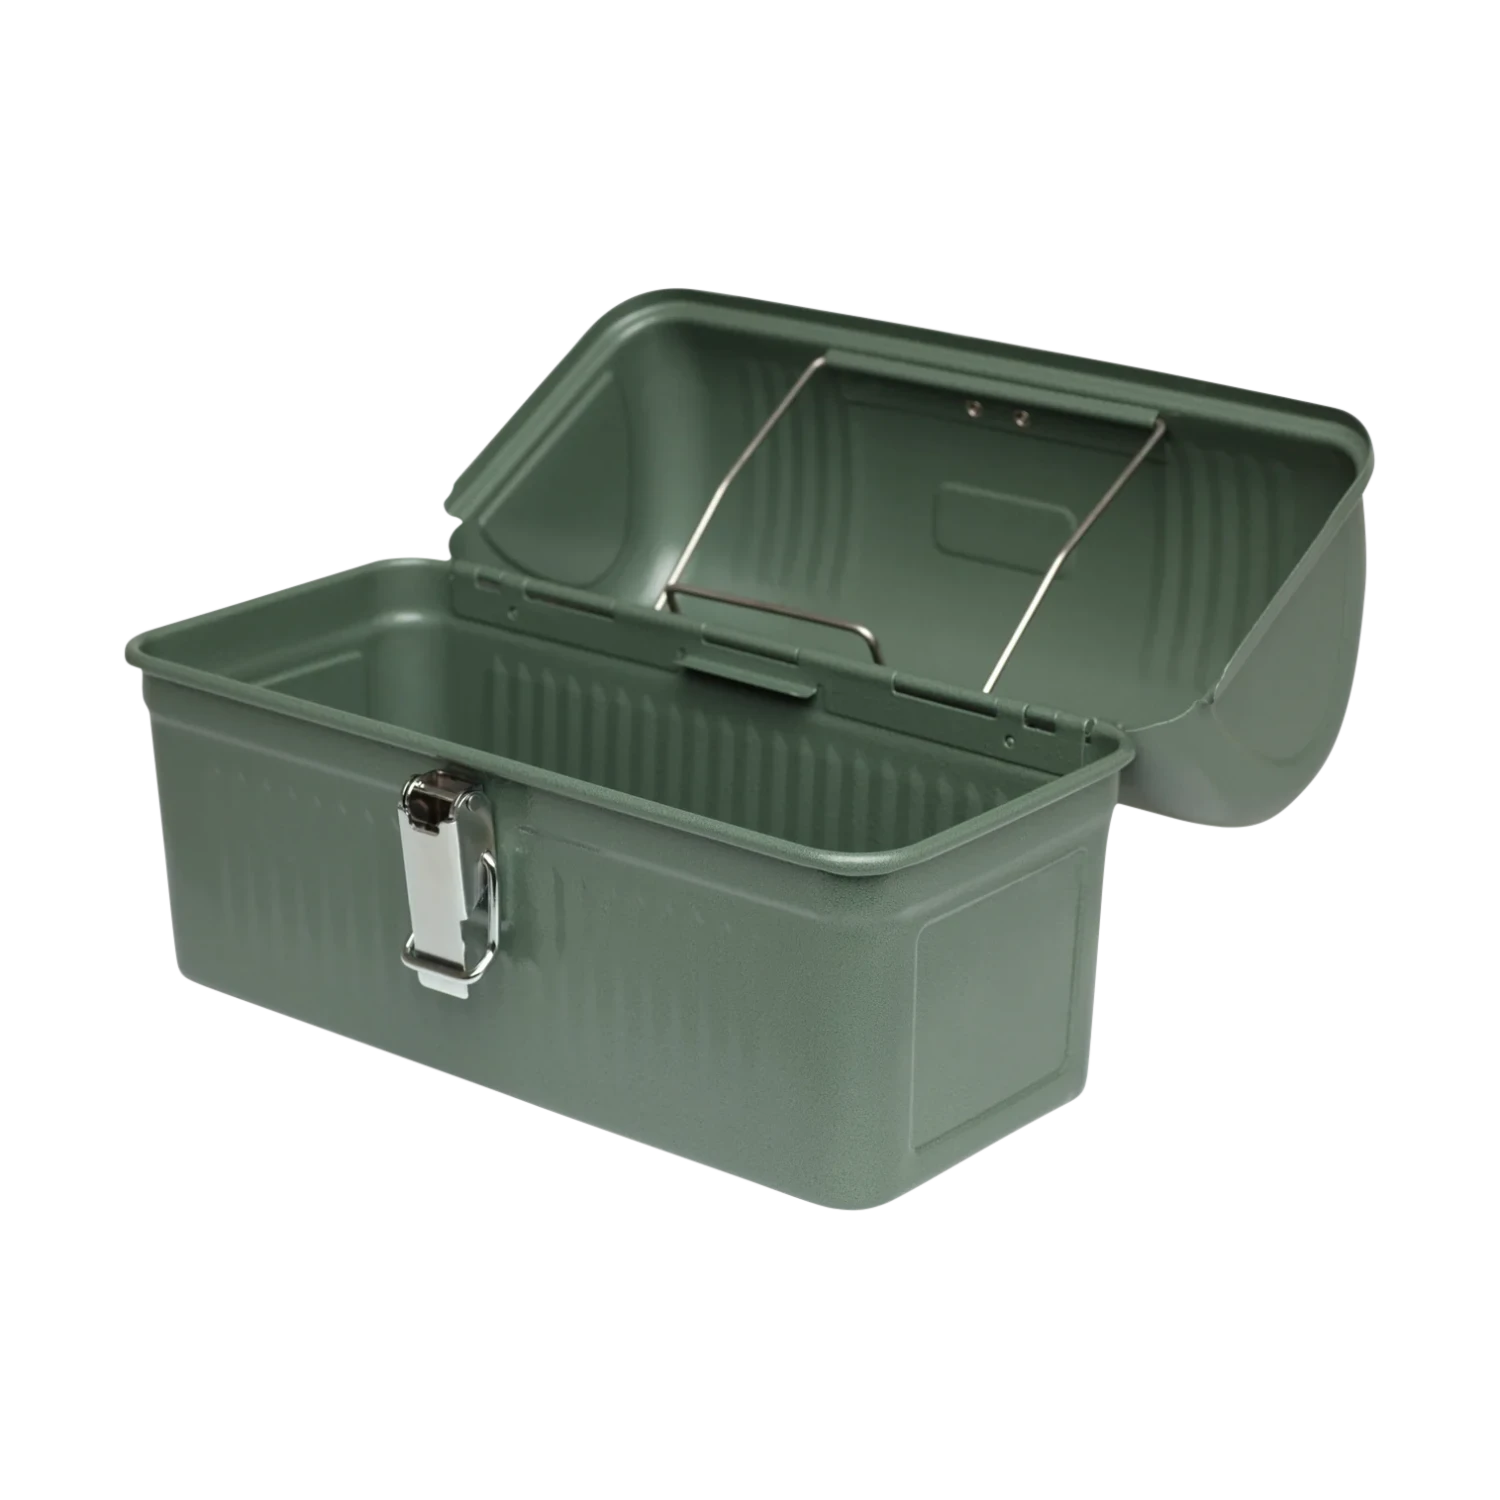 Stanley Classic Lunch Box 5.5 QT in hammertone green open